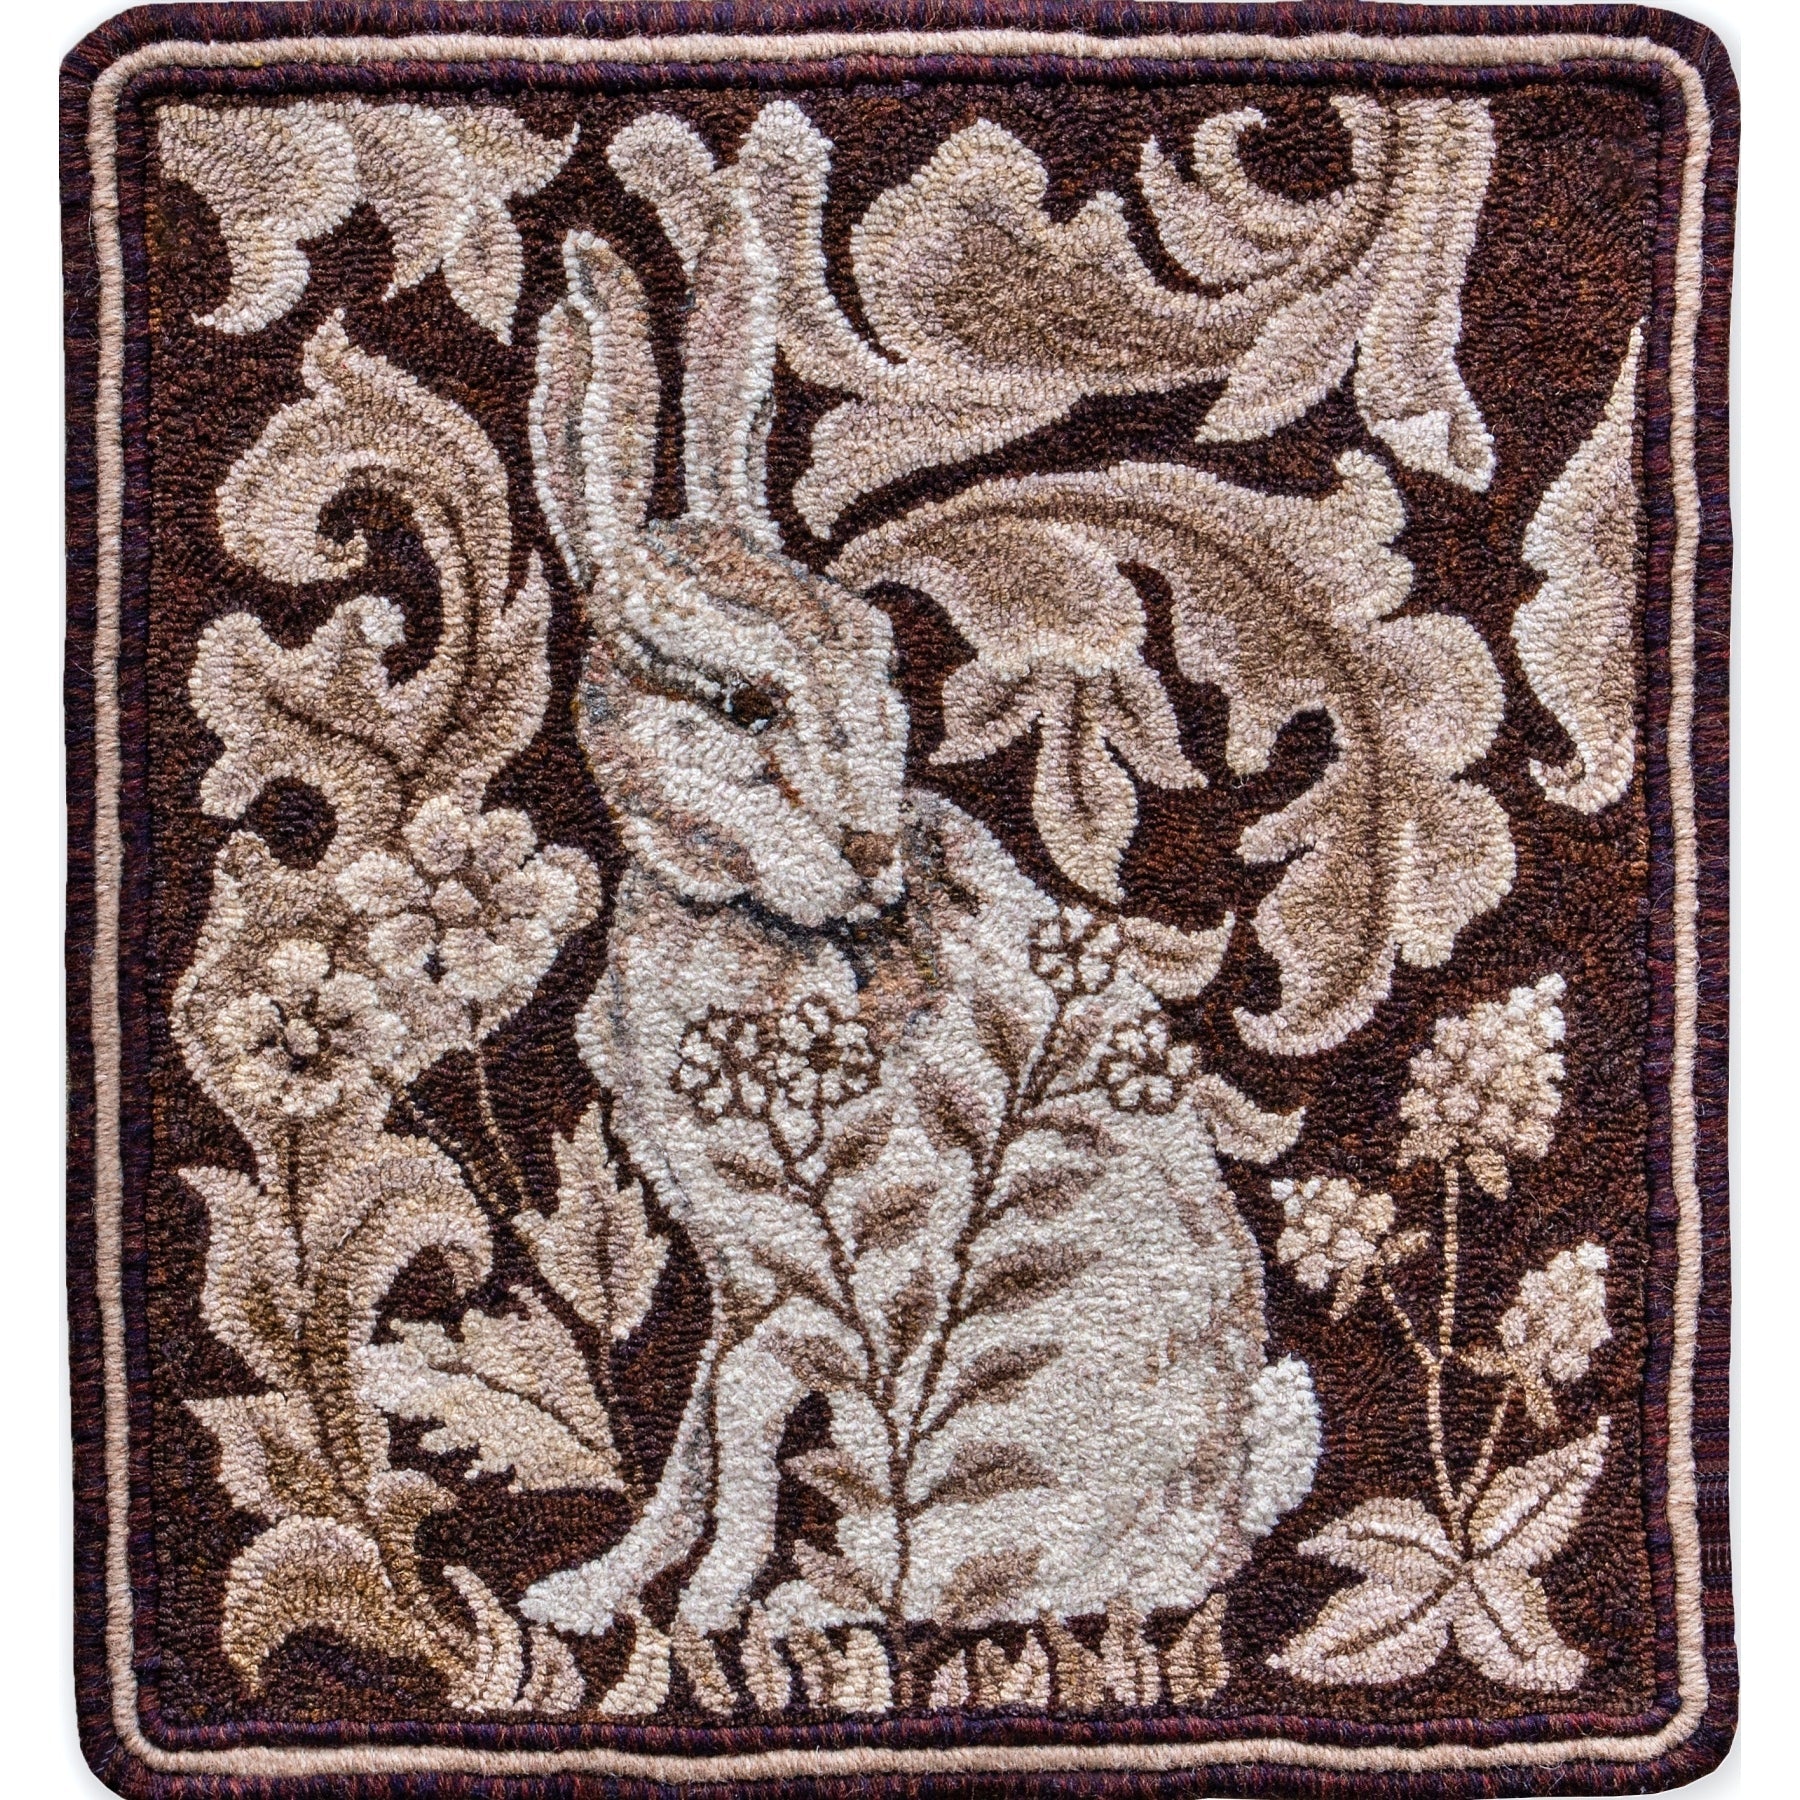 Morris Bunny, rug hooked by Liz Marino